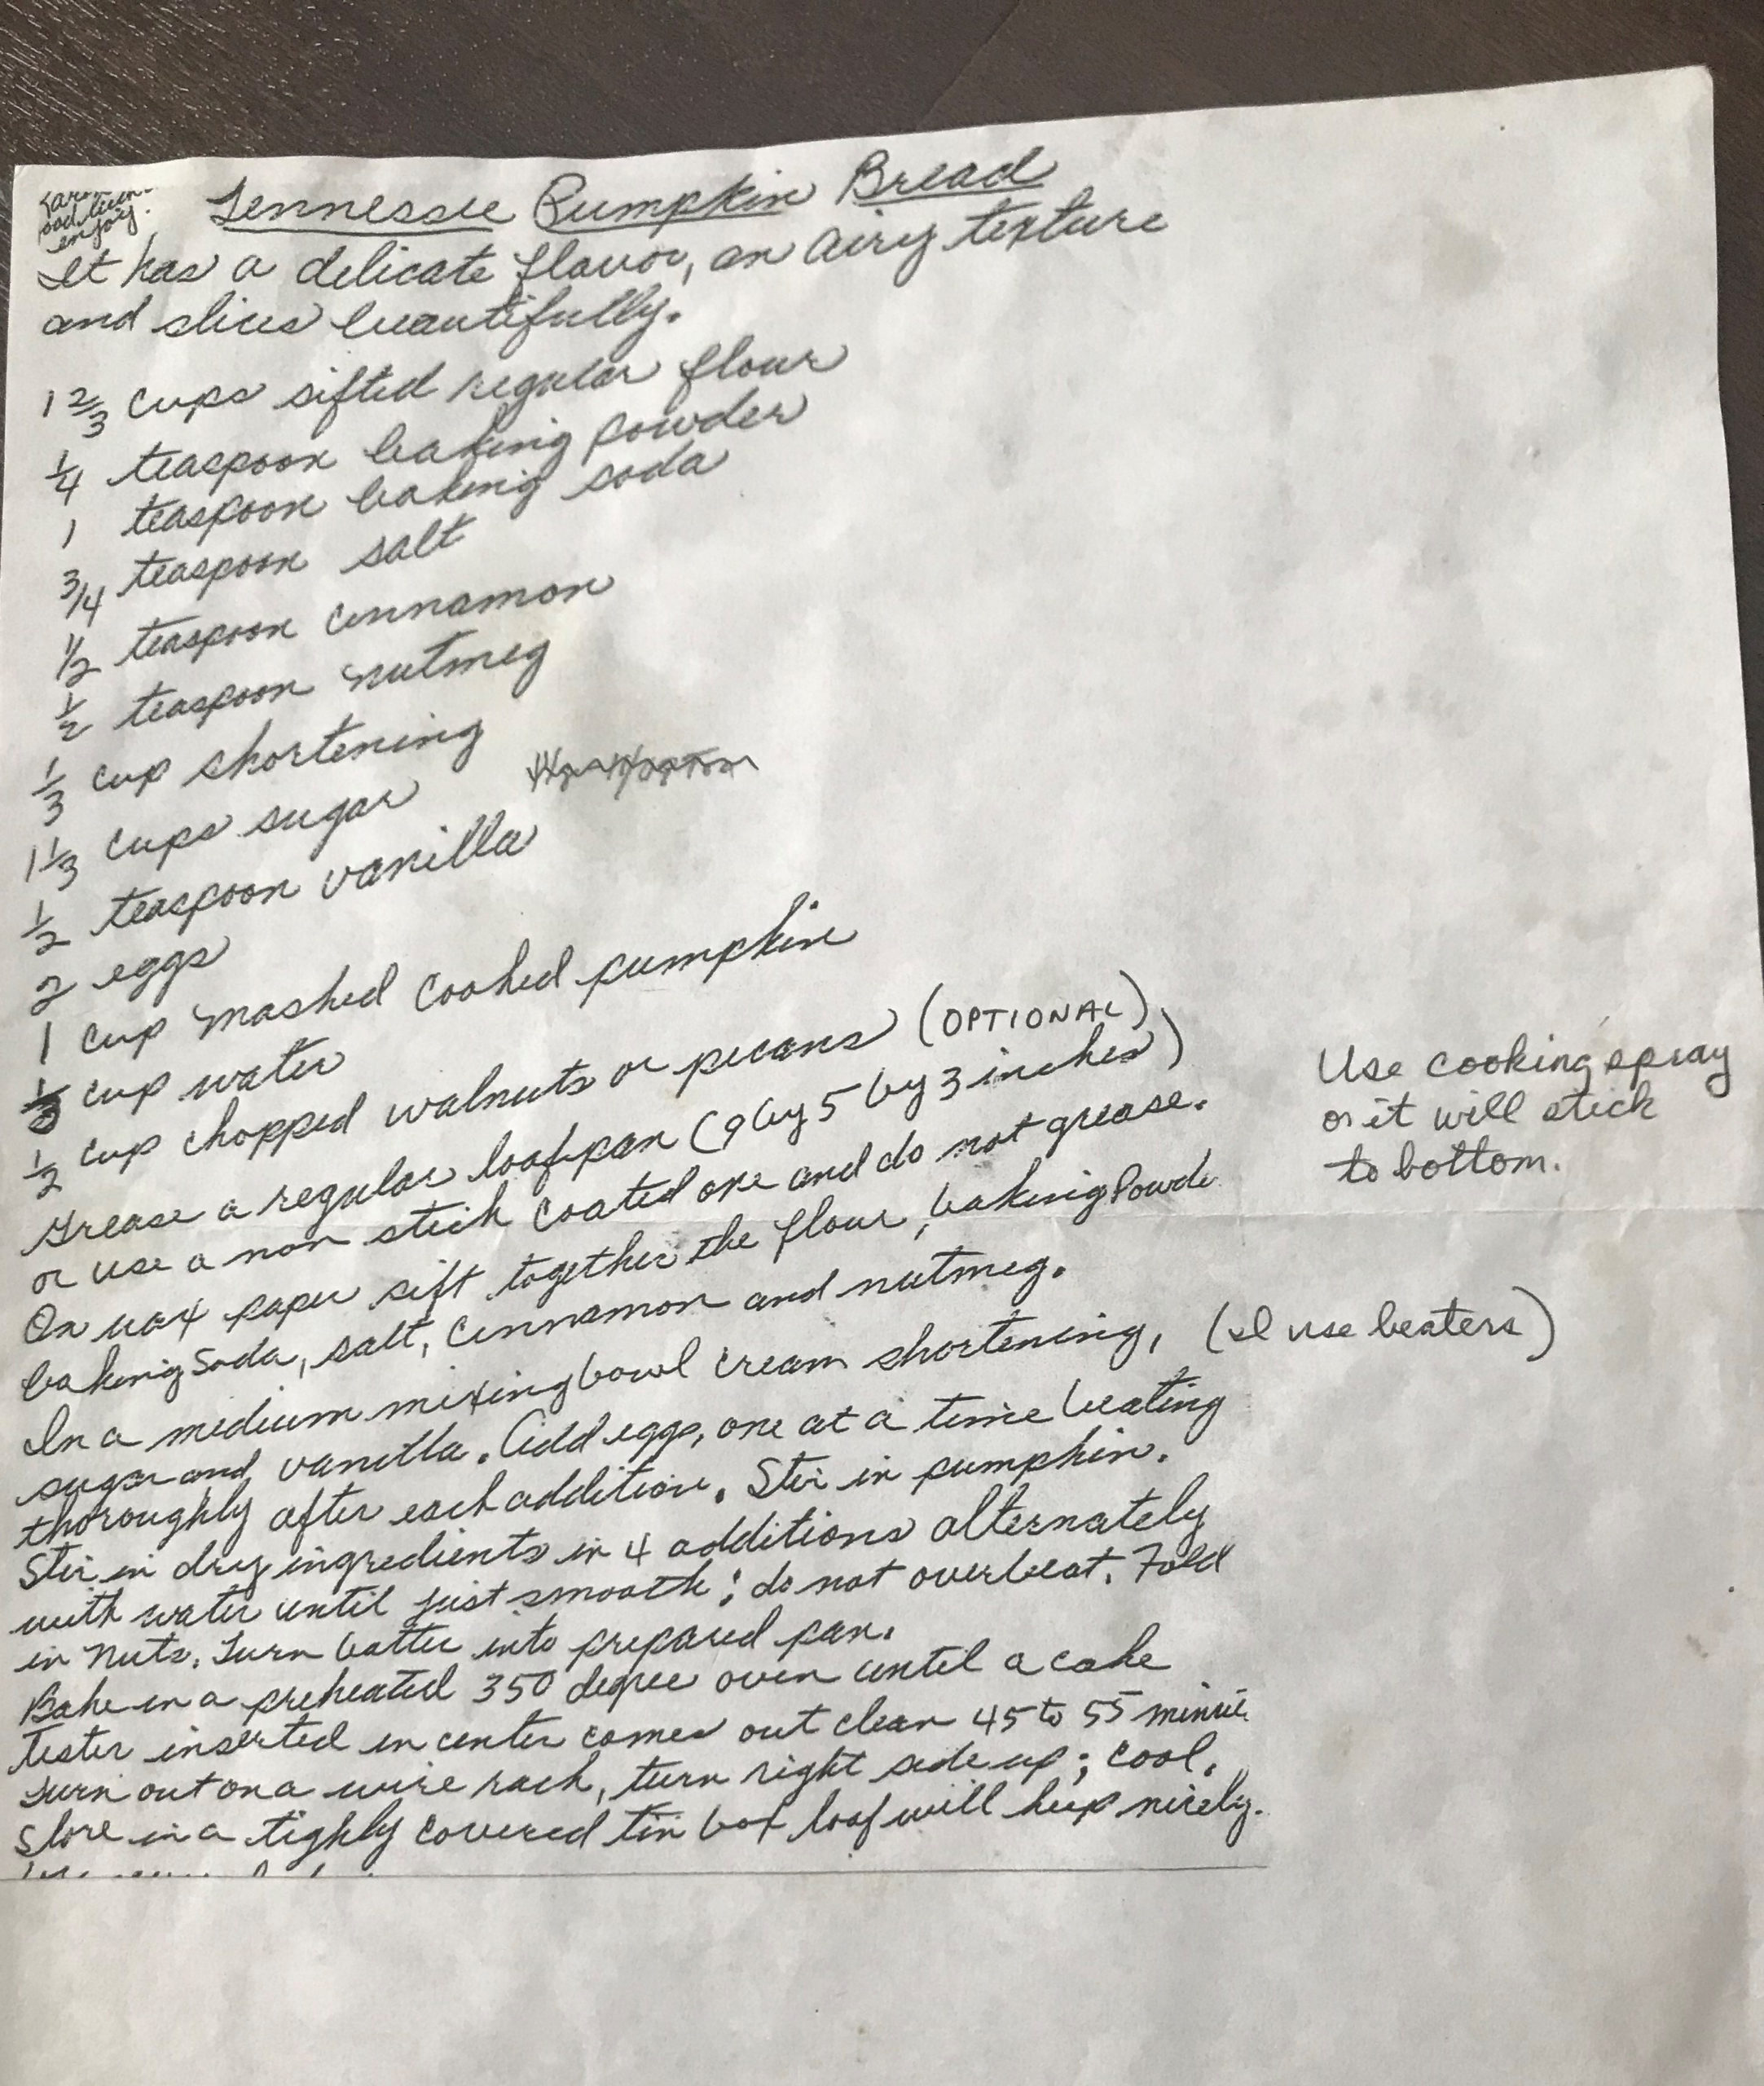 Handwritten recipe for pumpkin bread